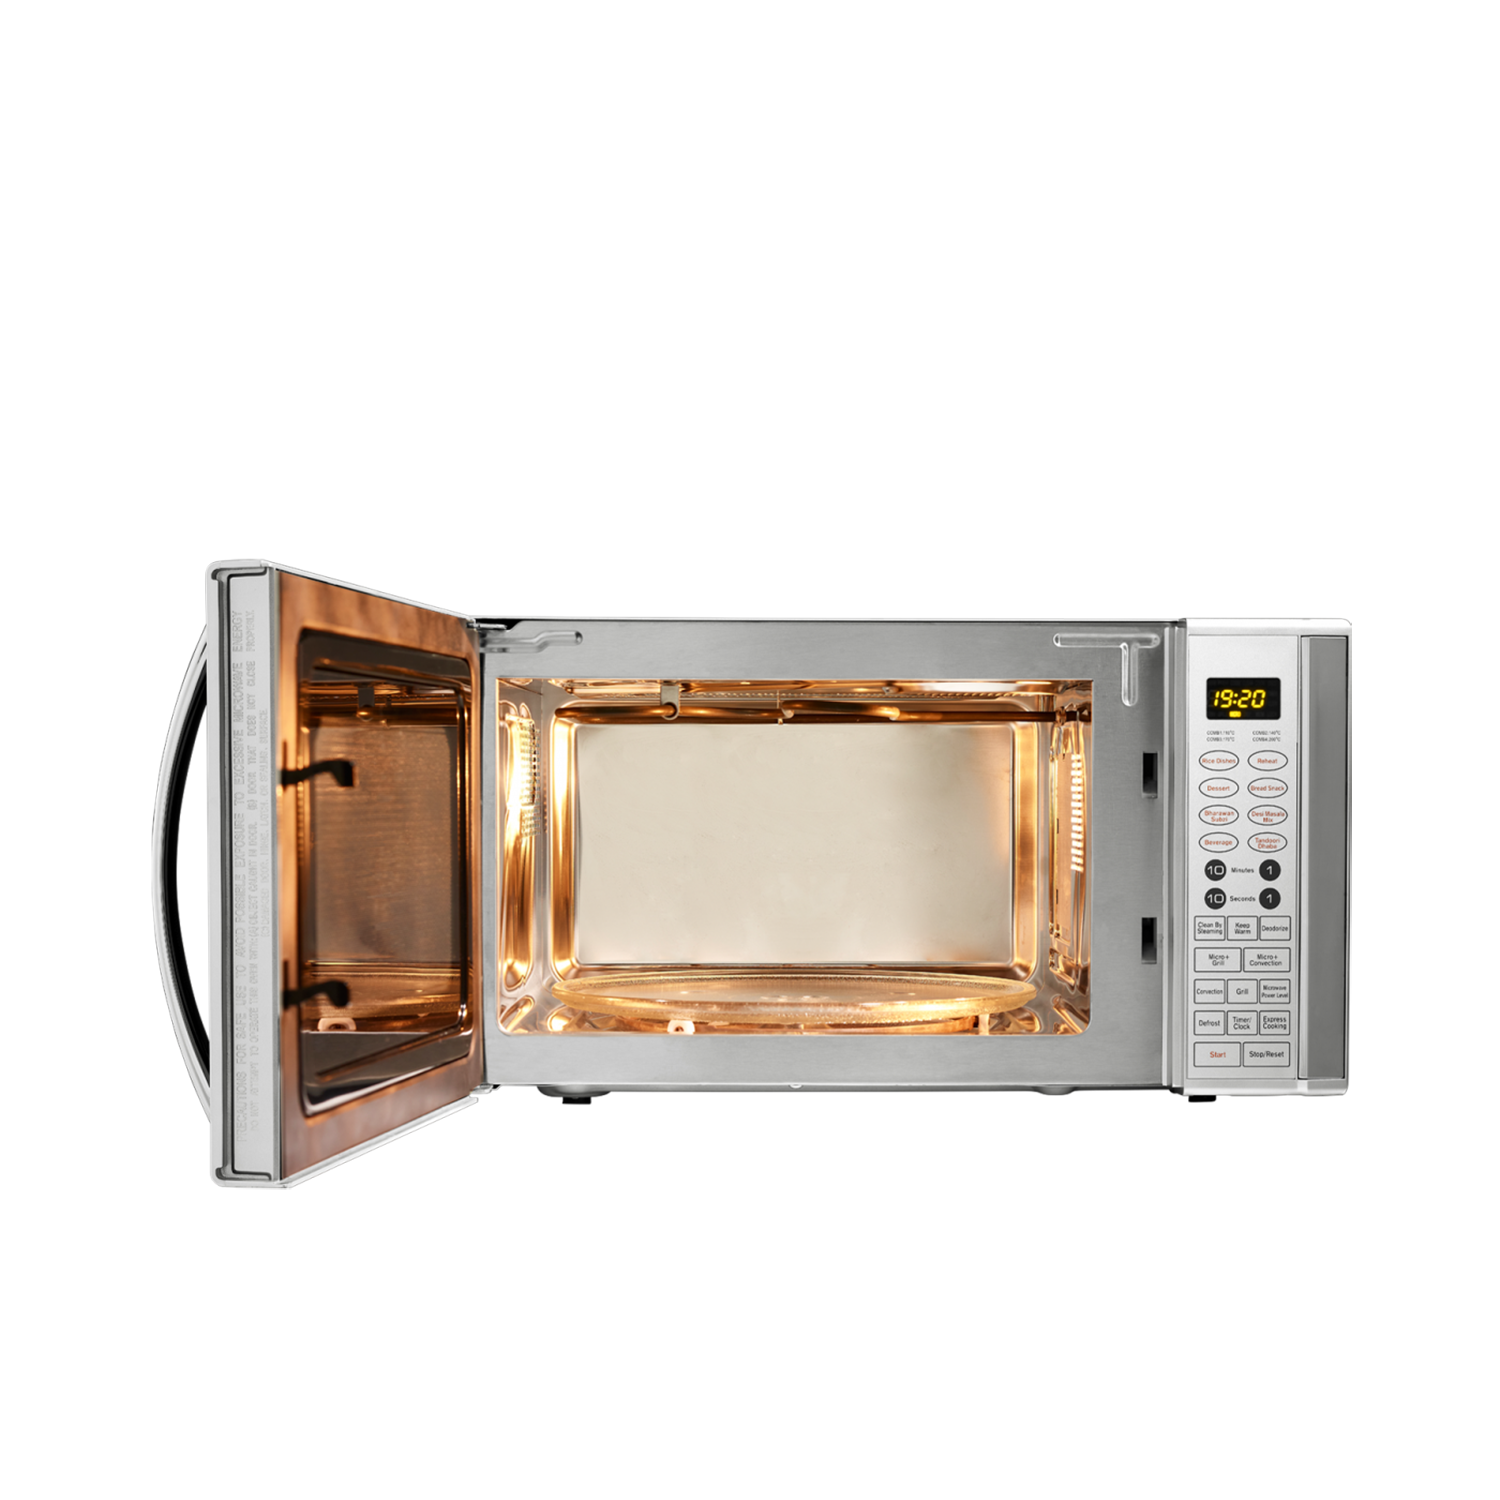 IFB 30SC4 Metal Metallic Silver 30L Microwave Oven